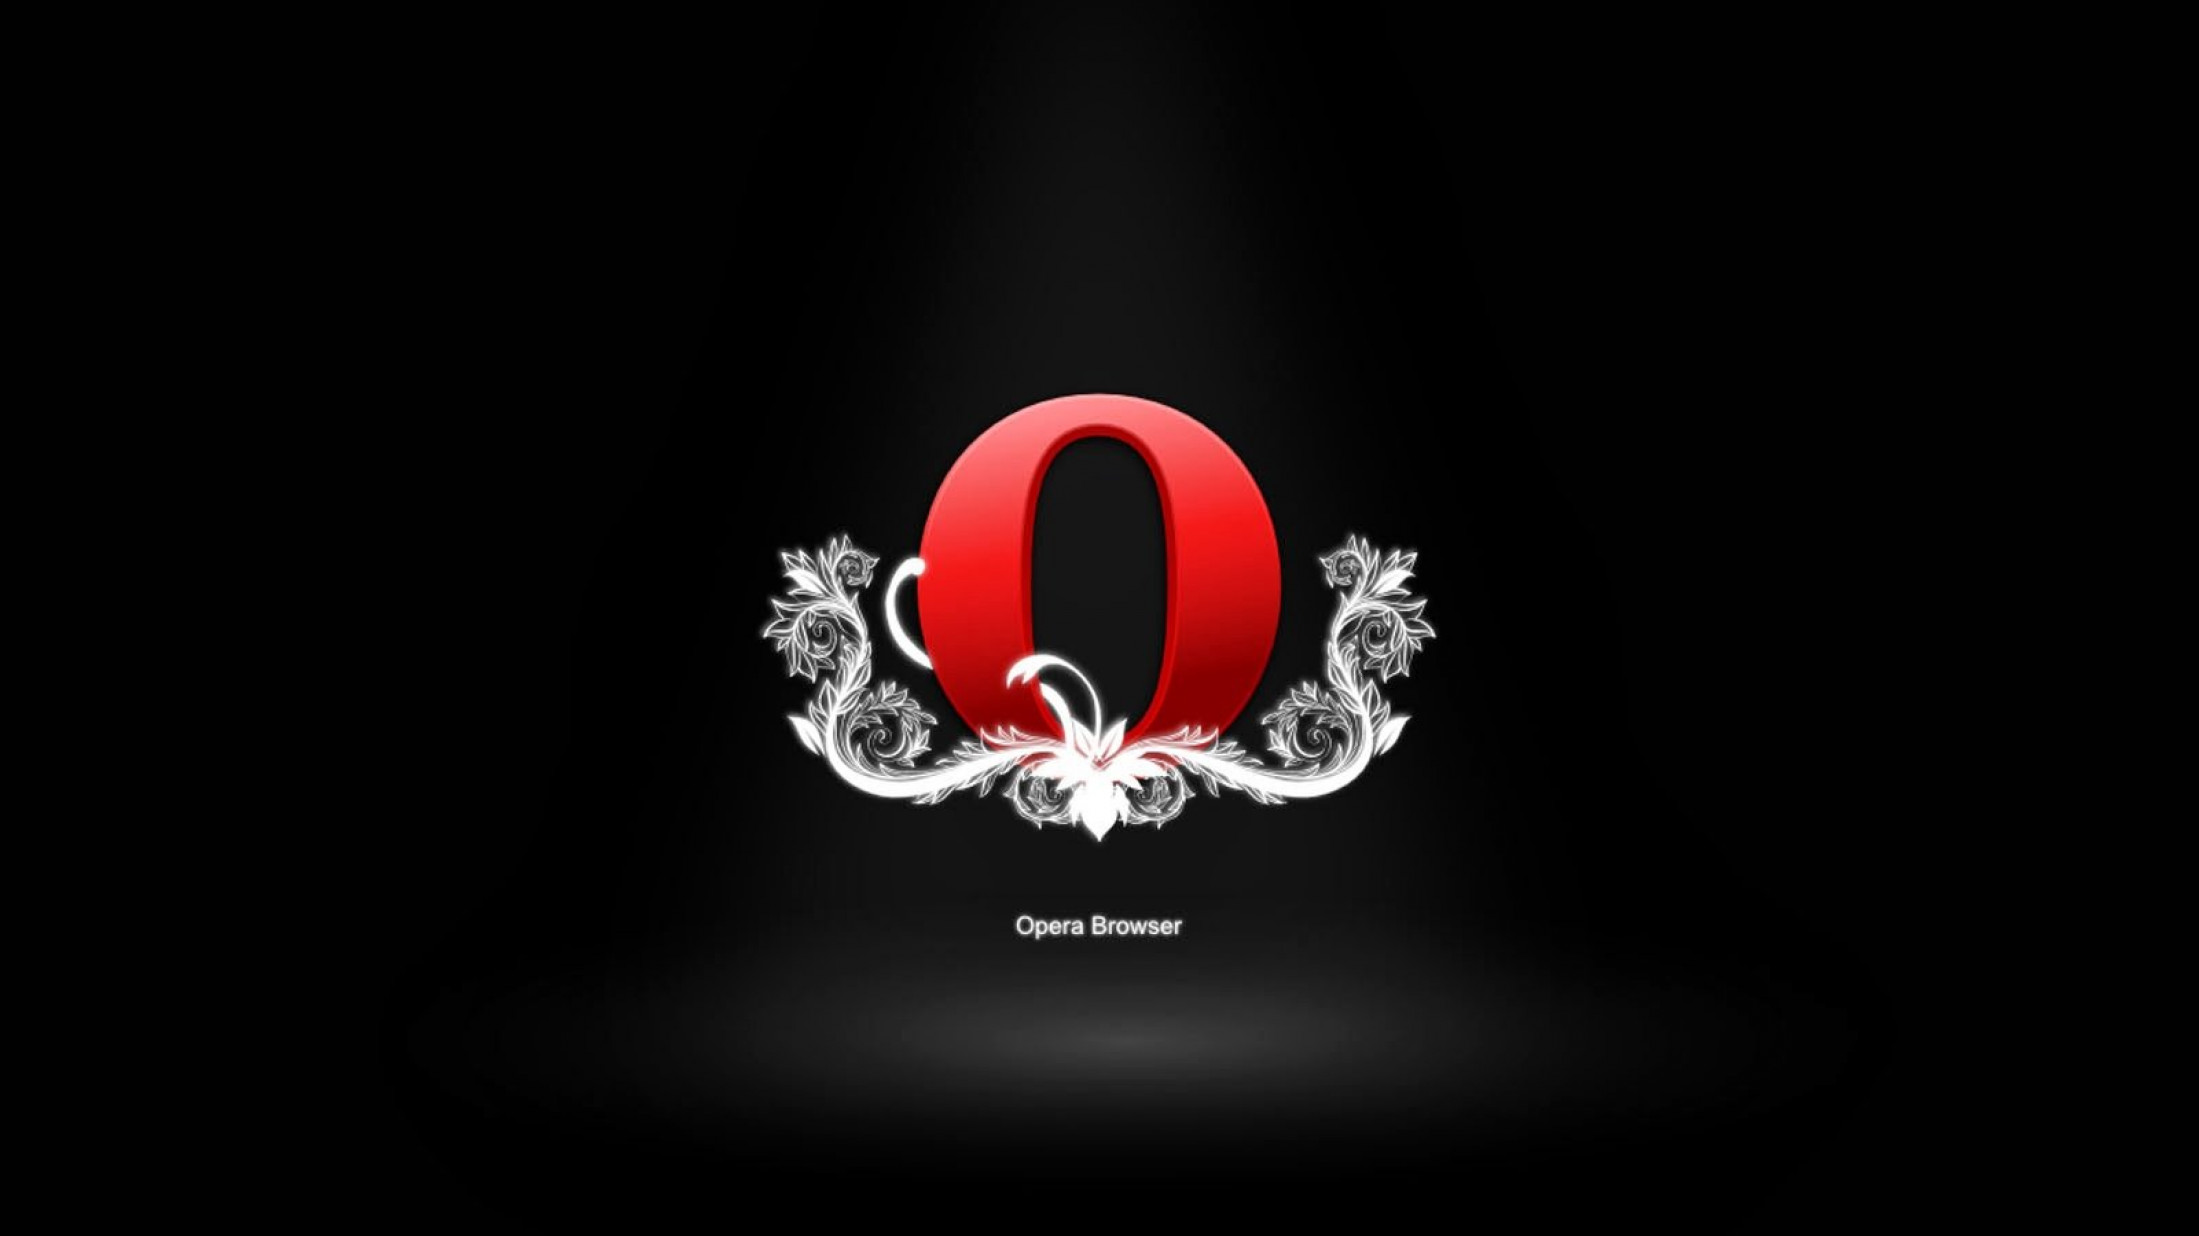 Браузер на телефон опер. Opera картинки. Фоновый рисунок для браузера опера. Опера браузер. Opera обои.